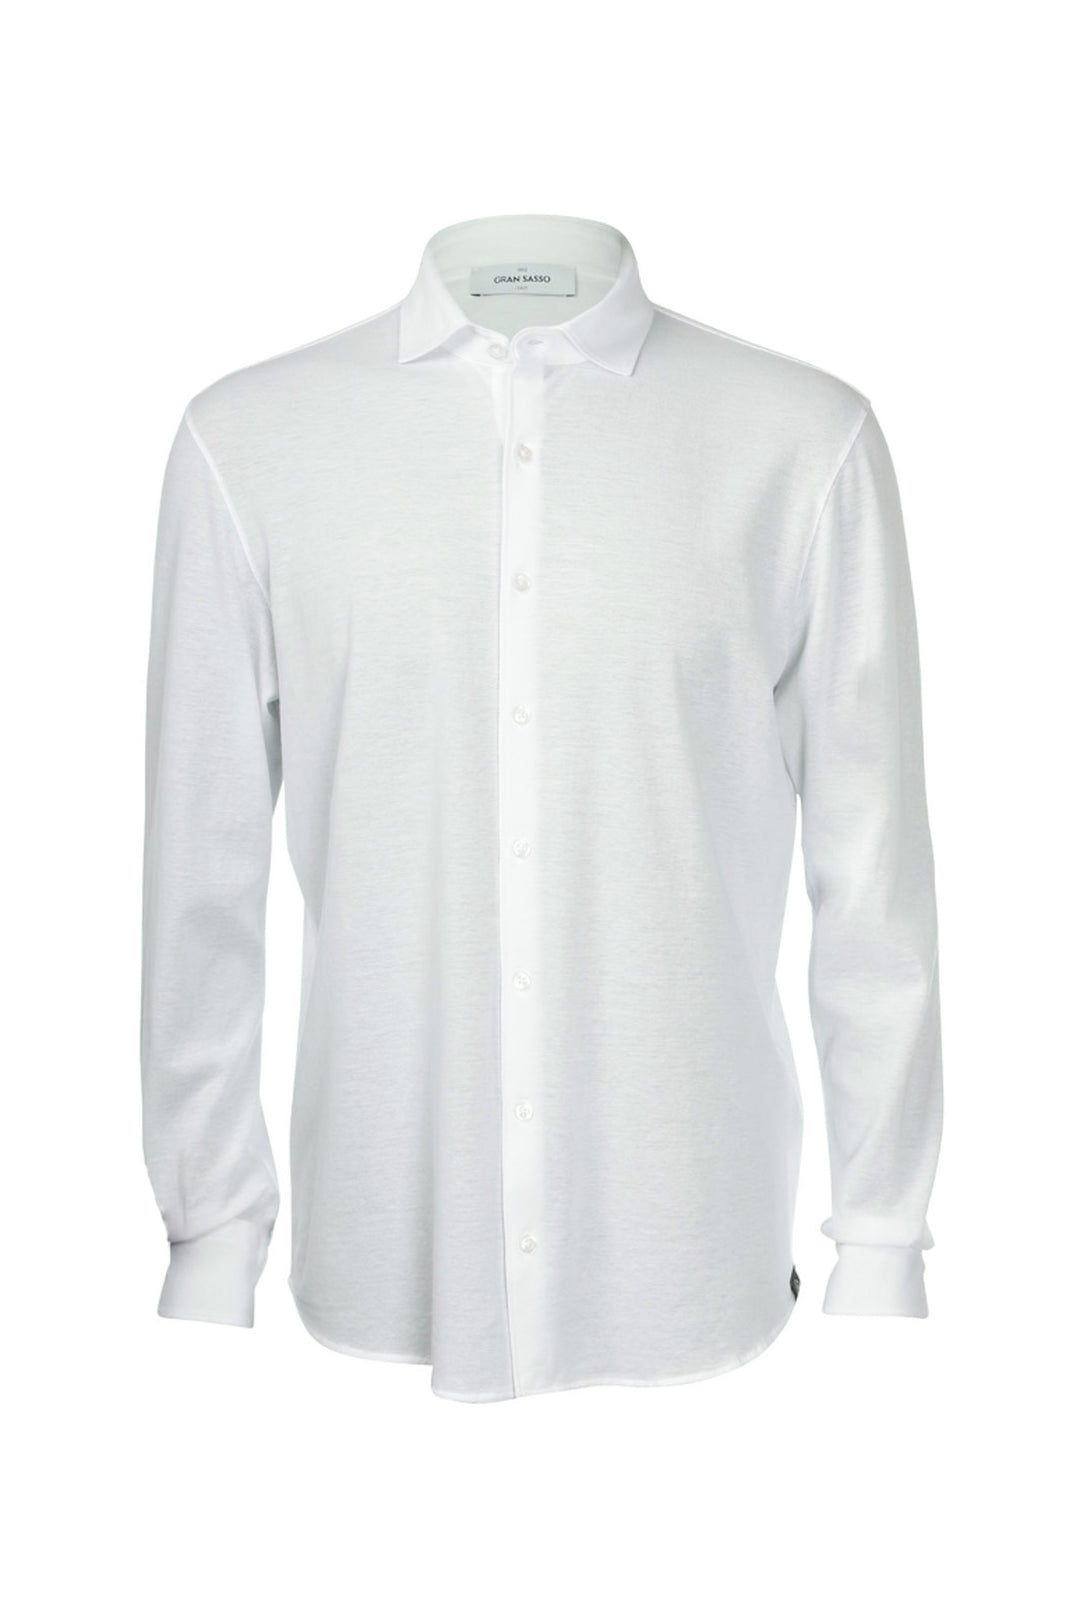 GRAN SASSO Camicia bianca in piquet di cotone light - Mancinelli 1954